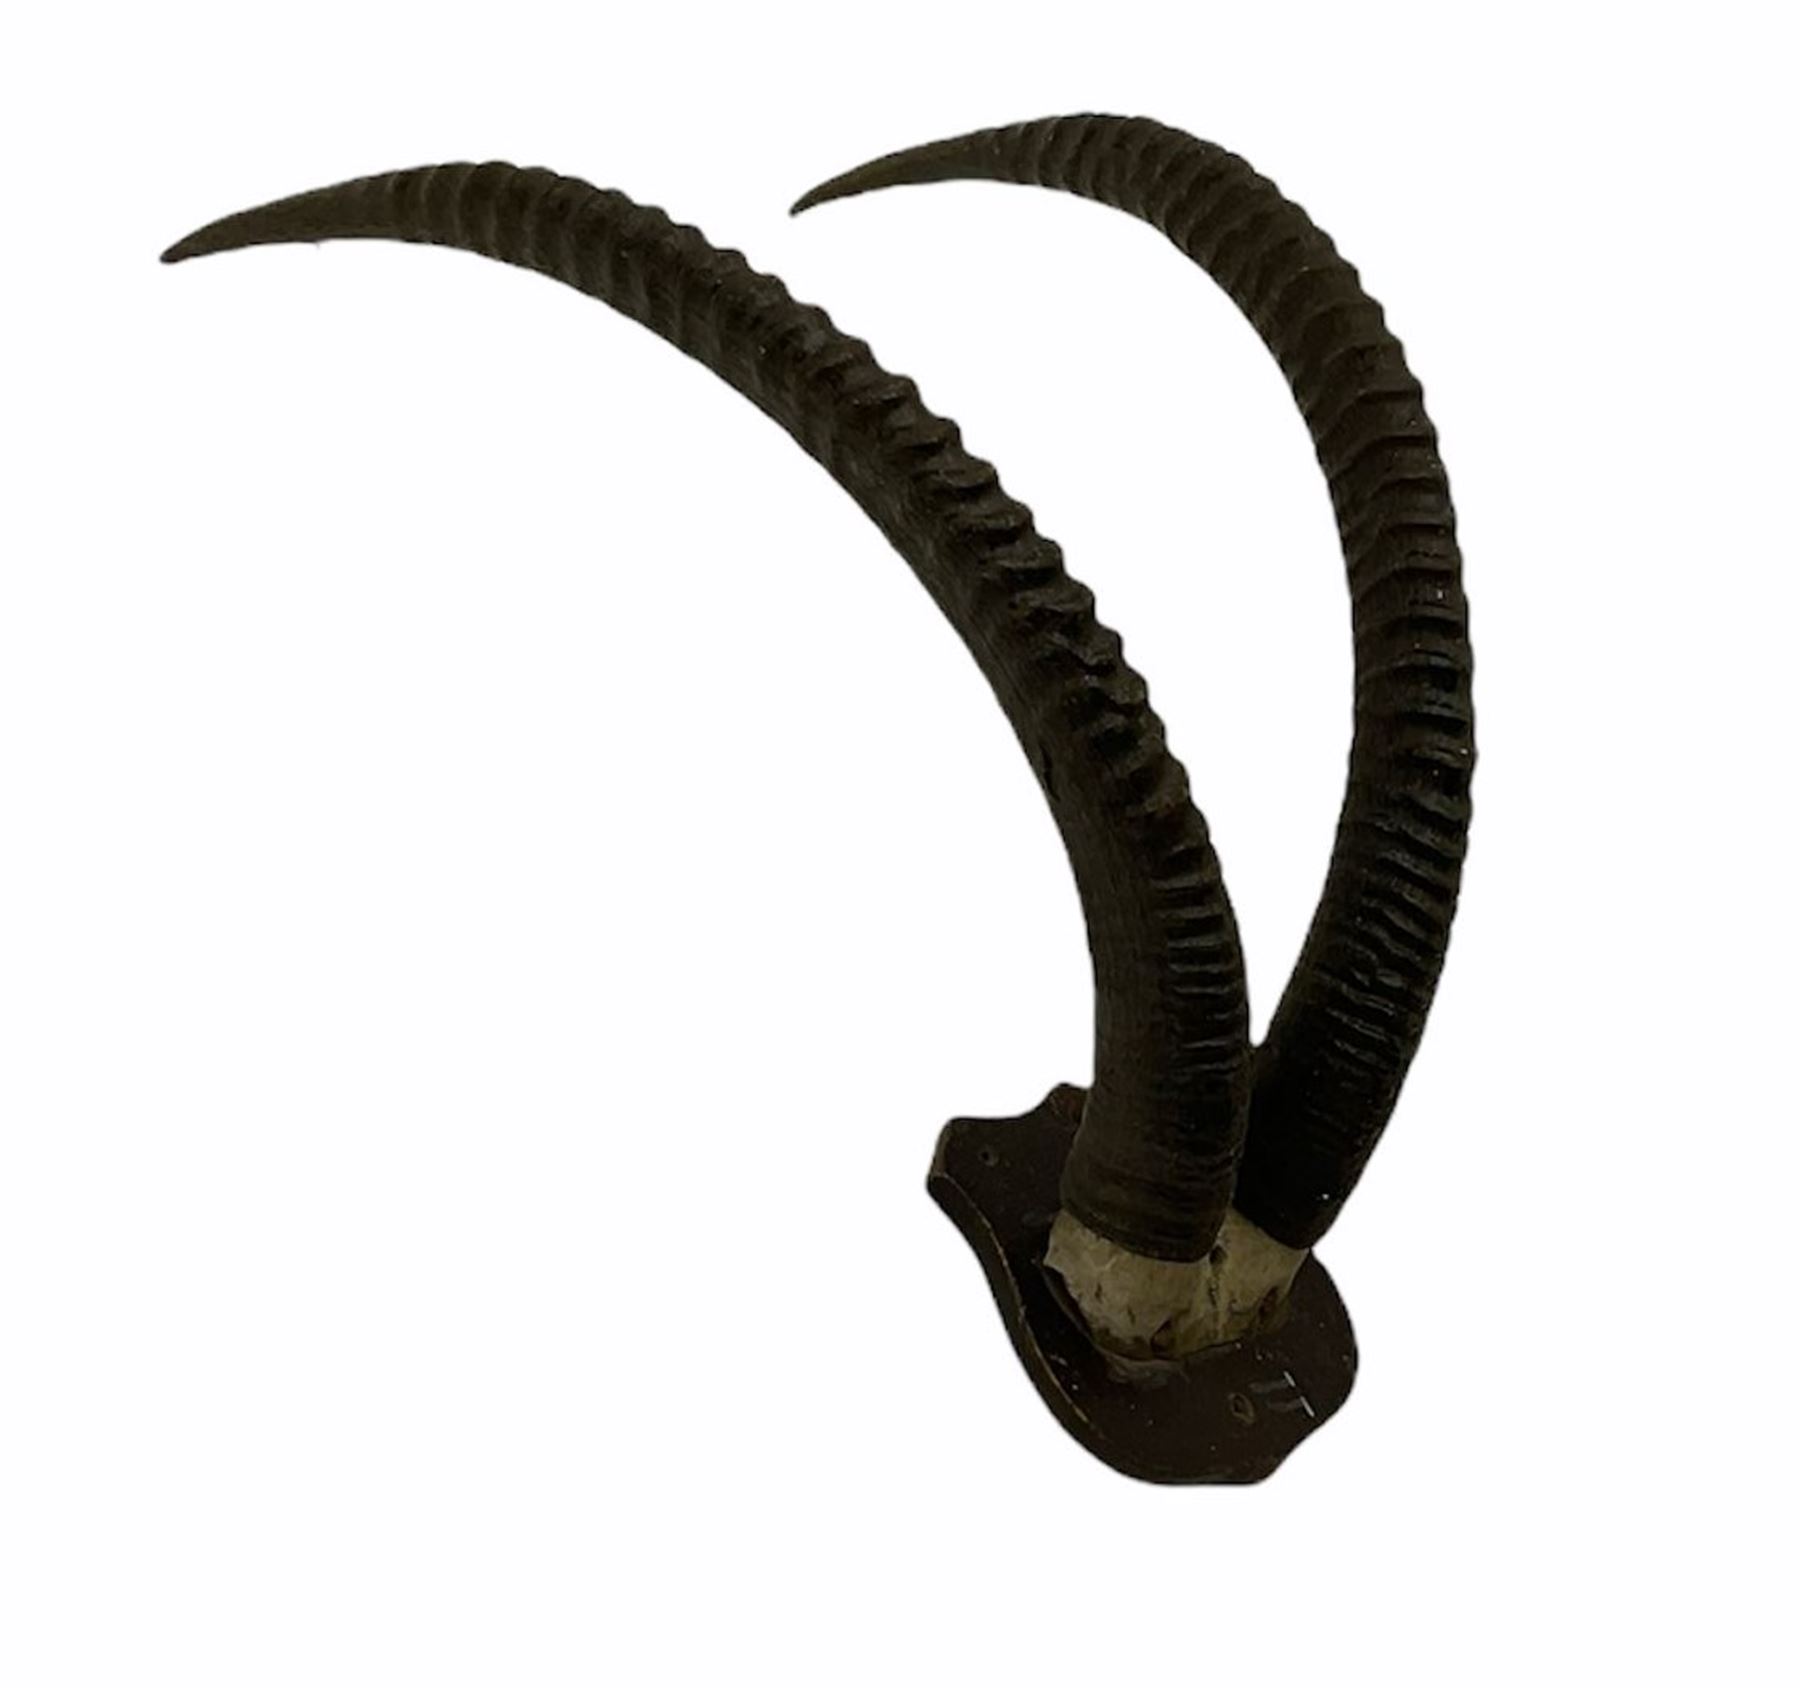 Antlers/Horns: Alpine Ibex (Capra ibex) curved adults horns